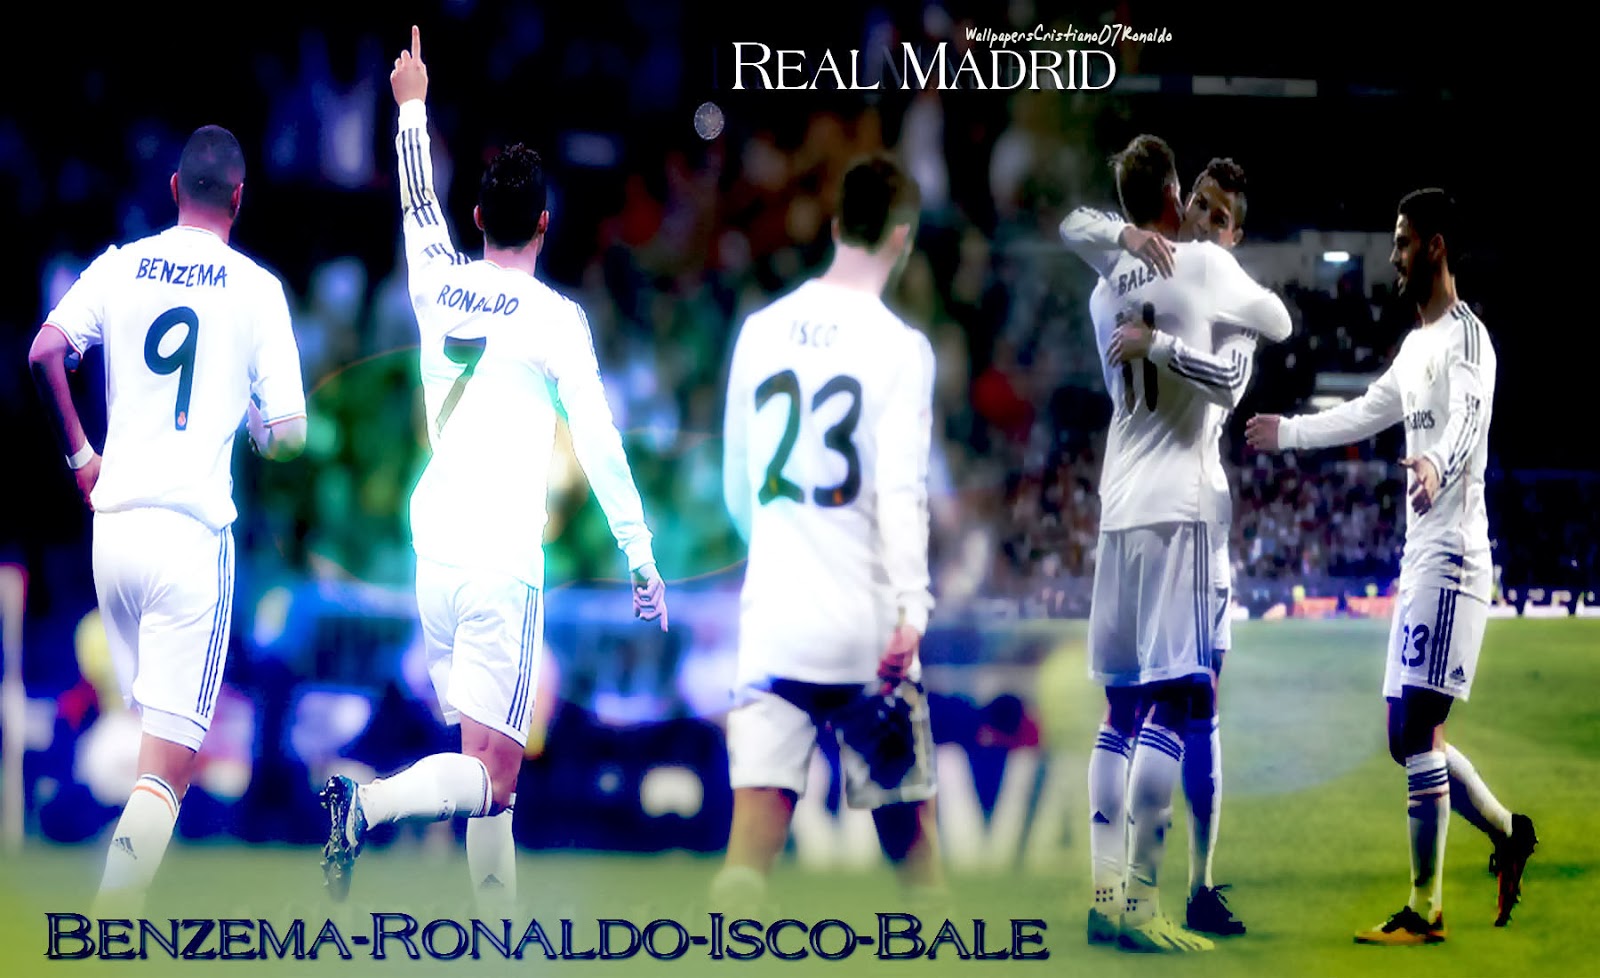 Cristiano Ronaldo Benzema Isco Bale Wallpaper HD Real Madrid